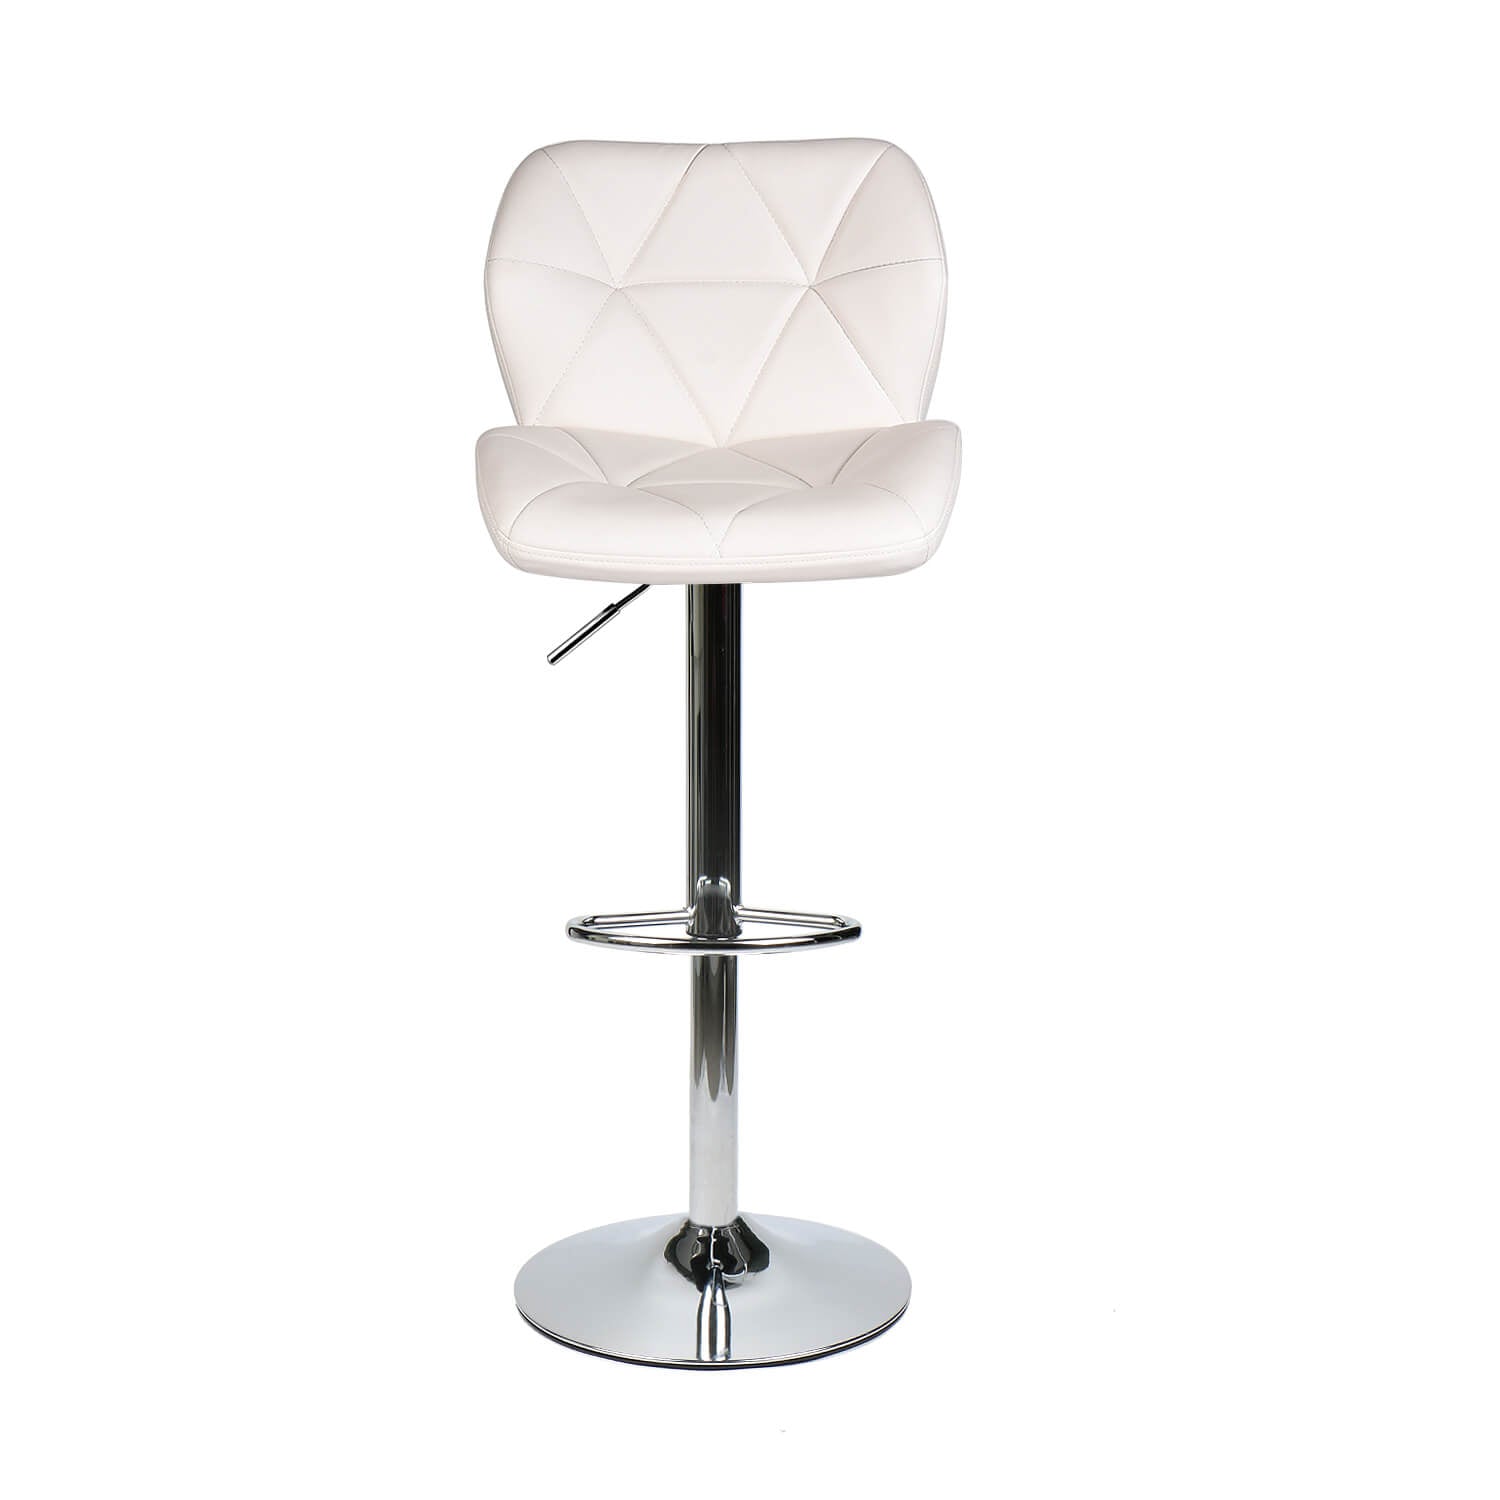 Elecwish white bar stool OW001